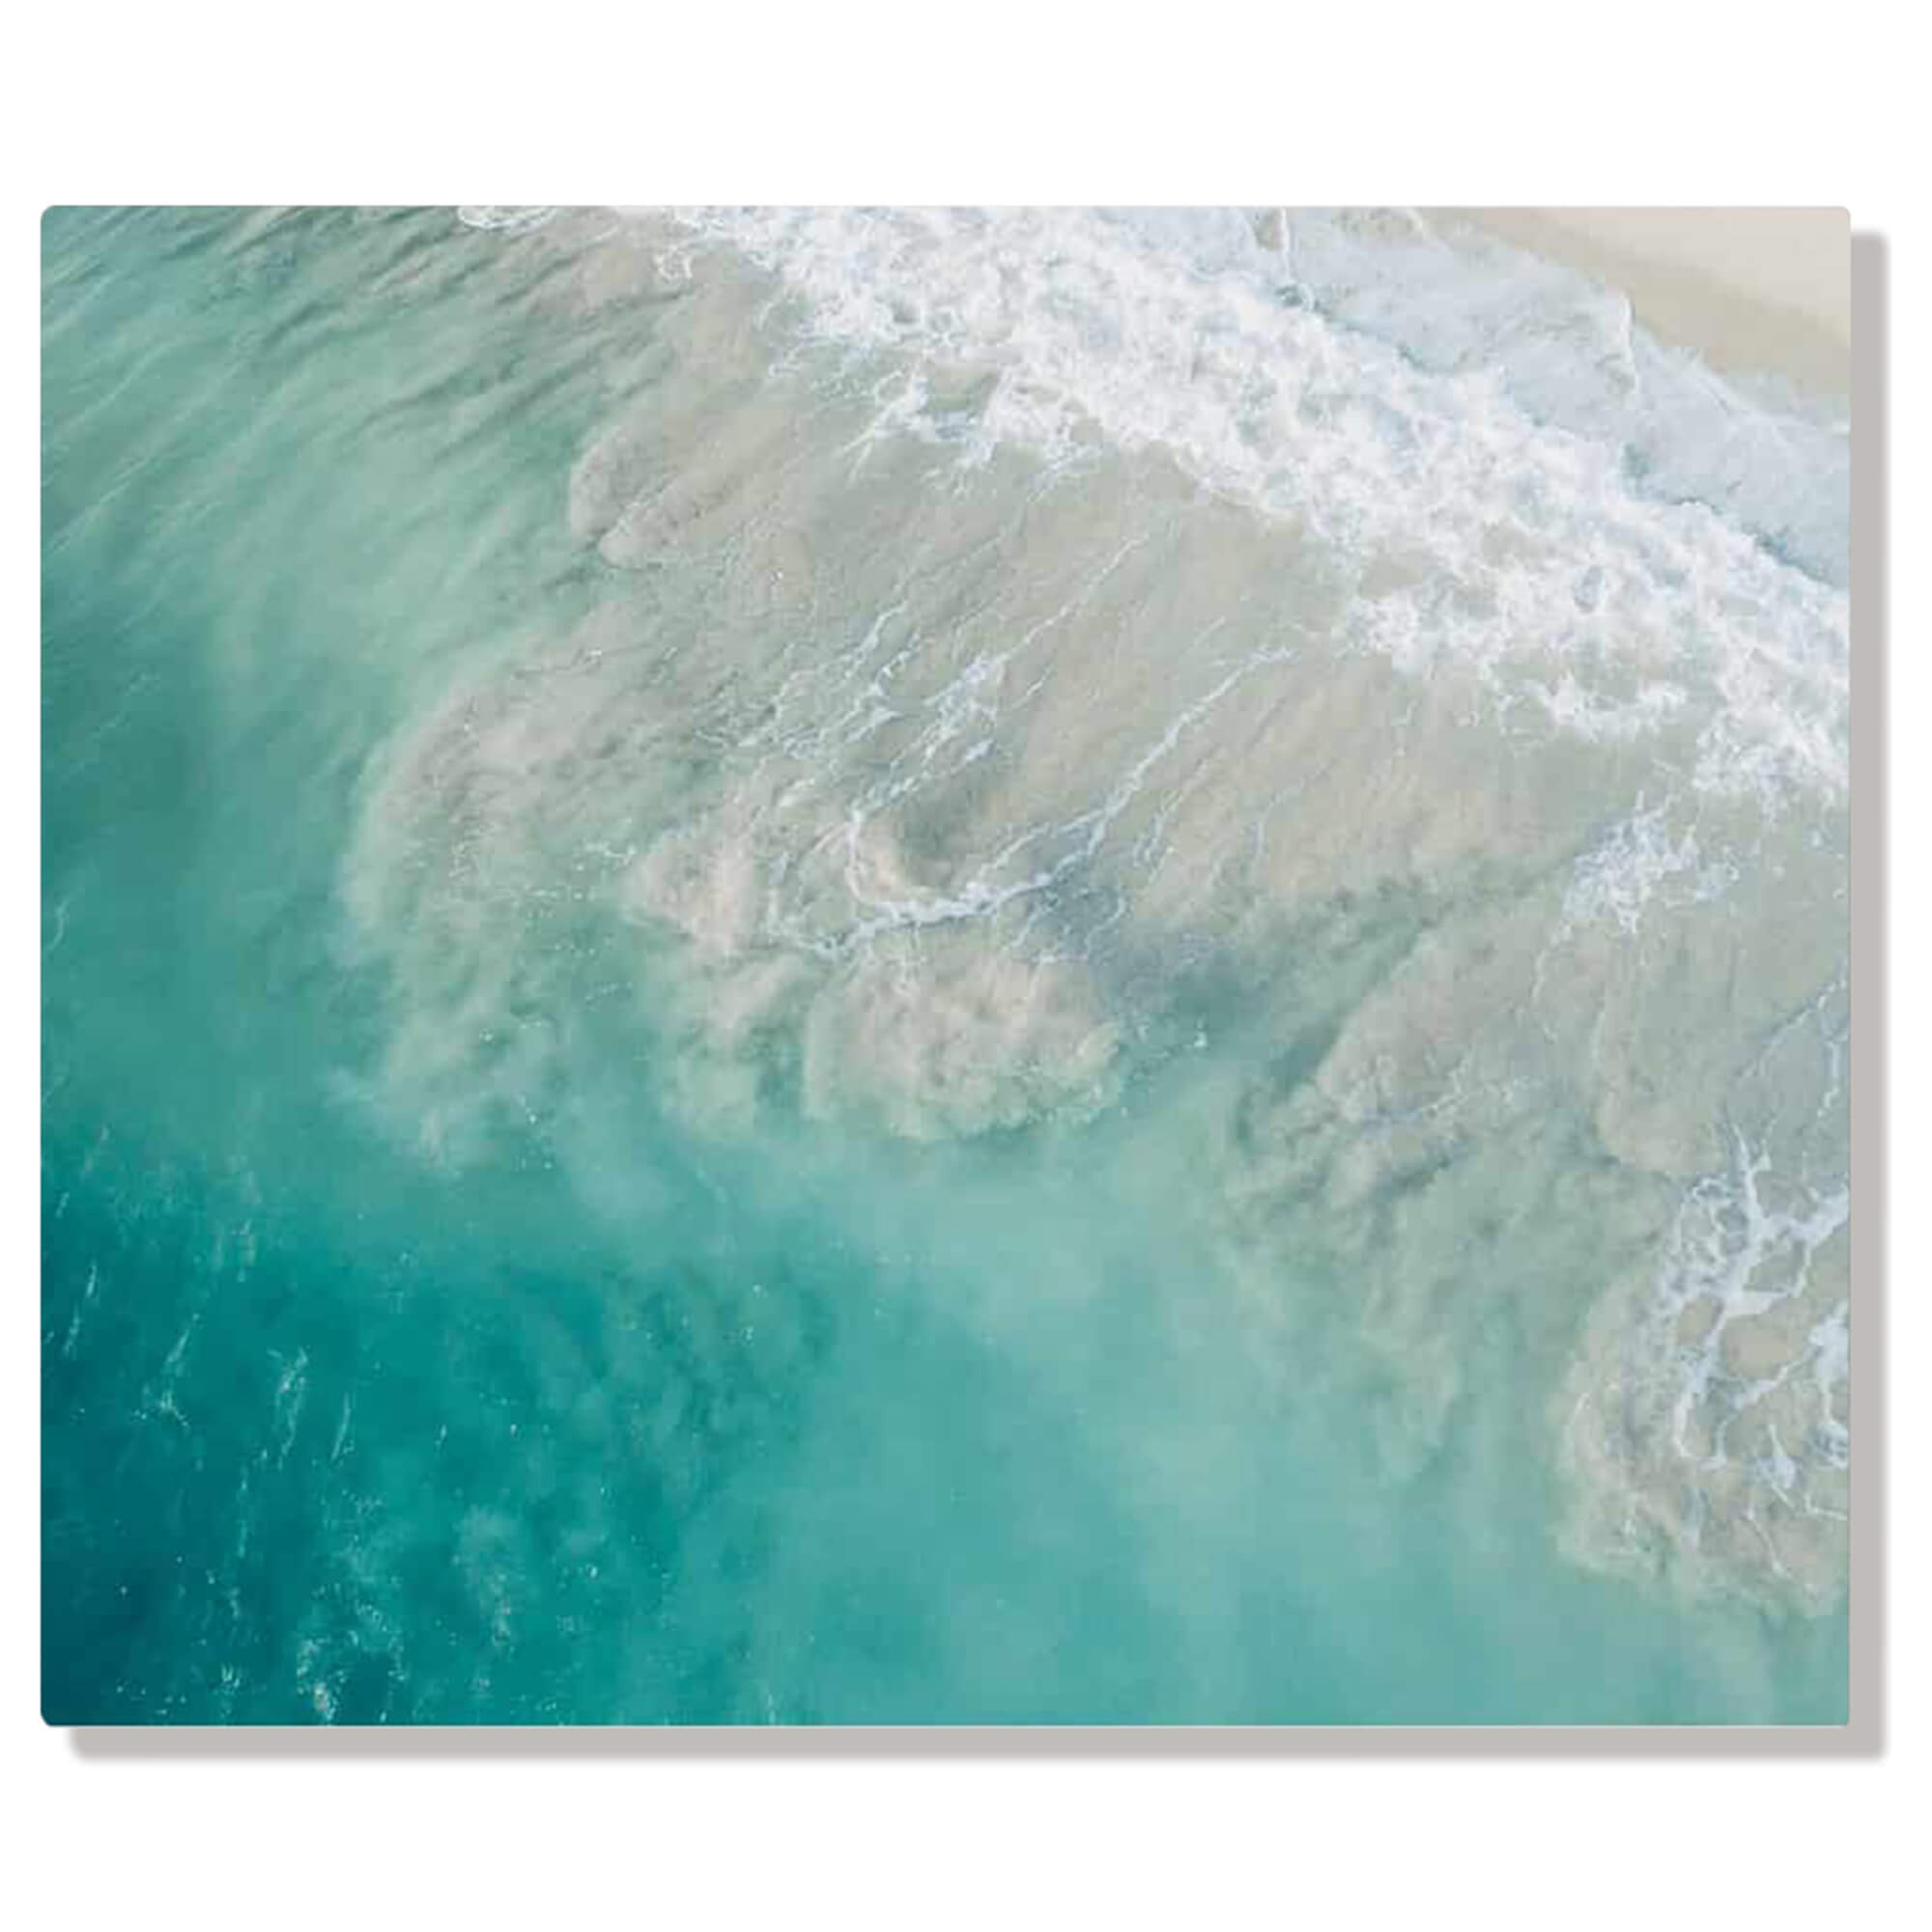 A metal art print of a coastal beach seascape photo by Hawaii artist Bree Poort